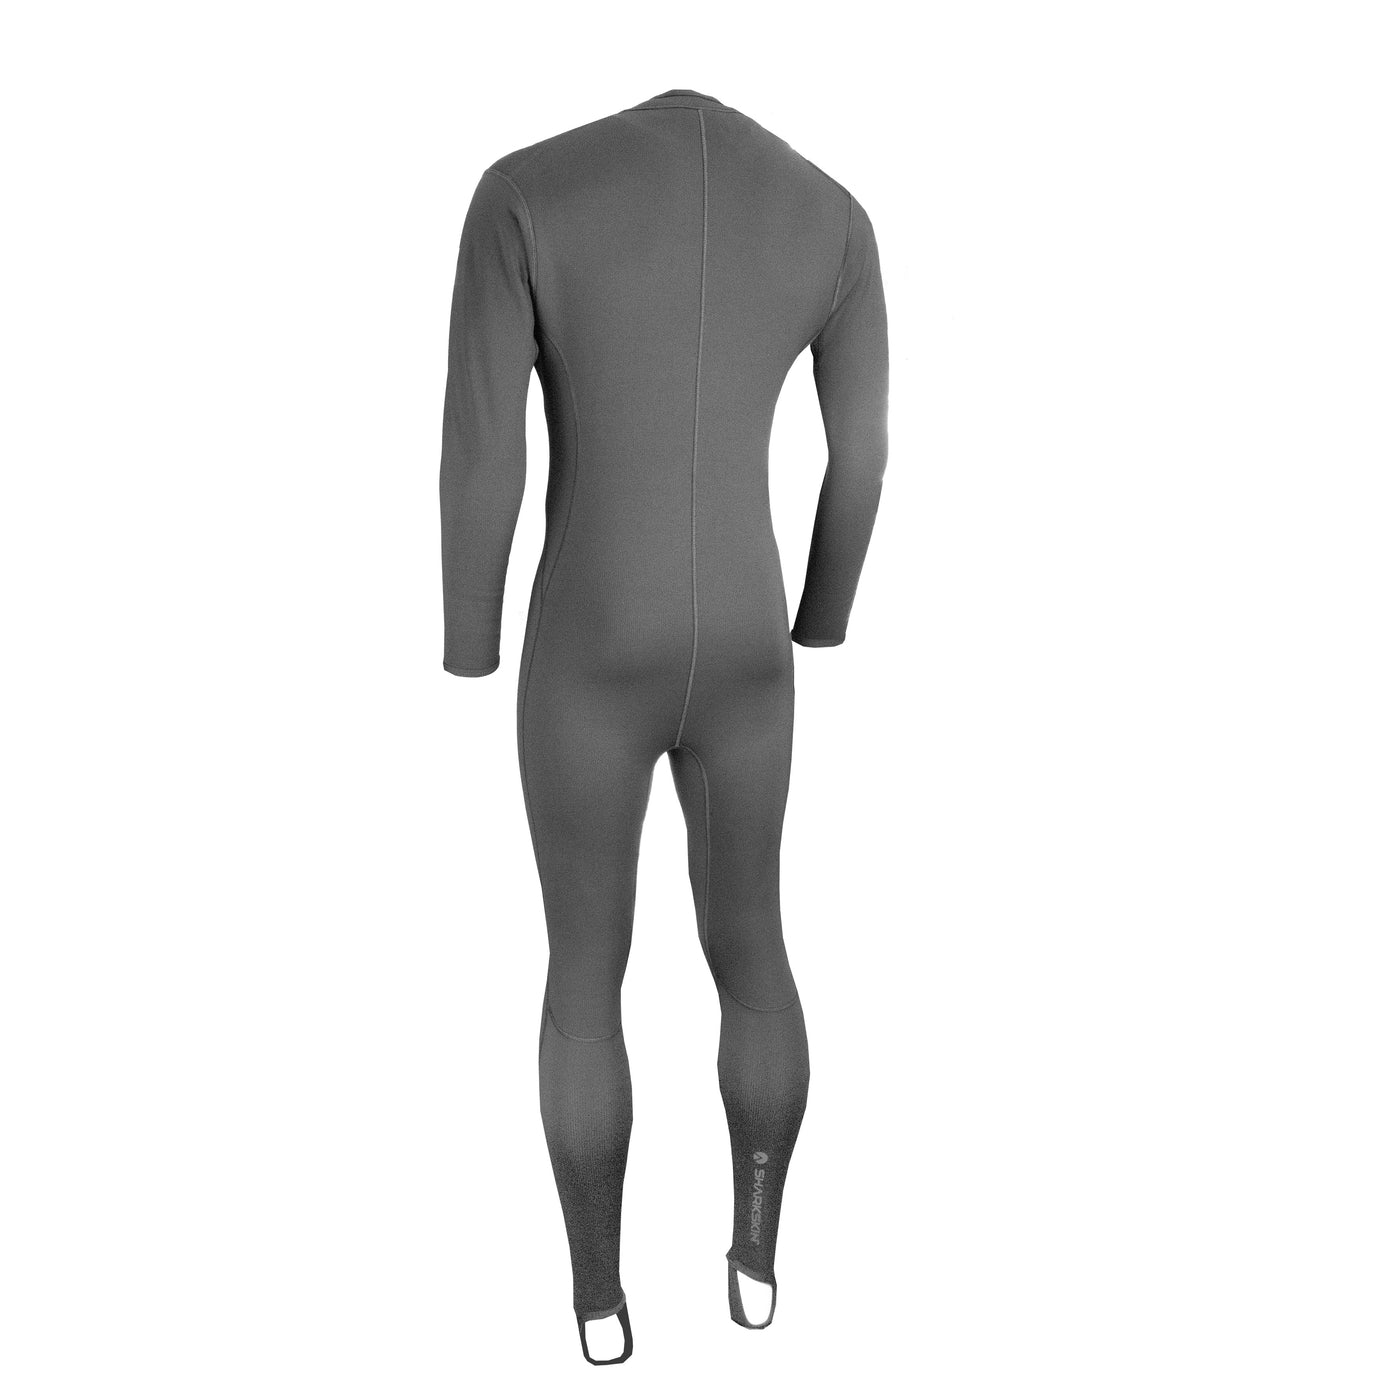 Titanium 2 Front Zip Suit (Male)